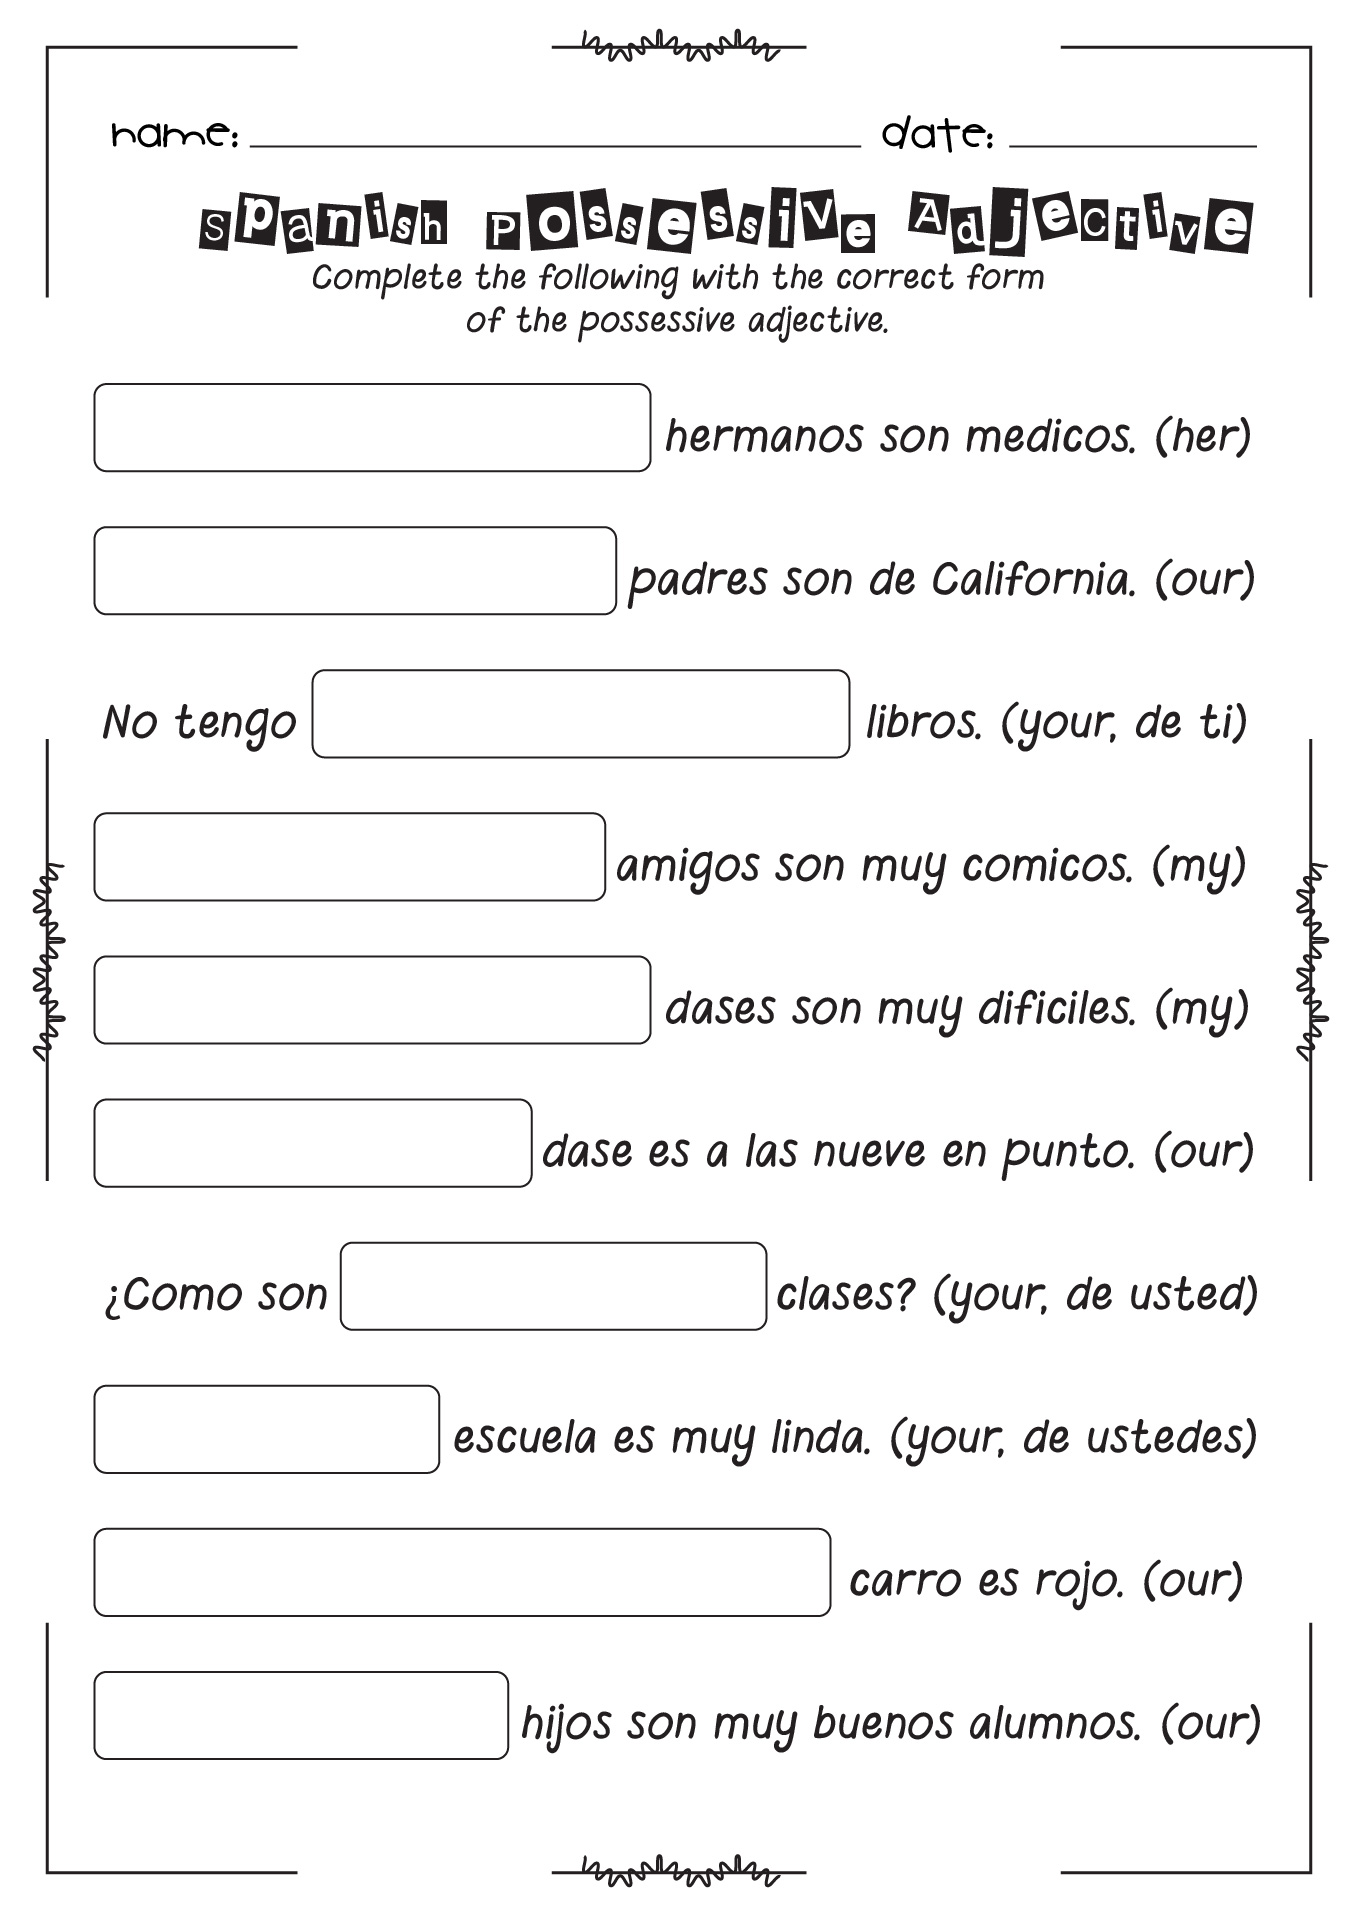 Spanish Possessive Adjectives Worksheet 2 Answers